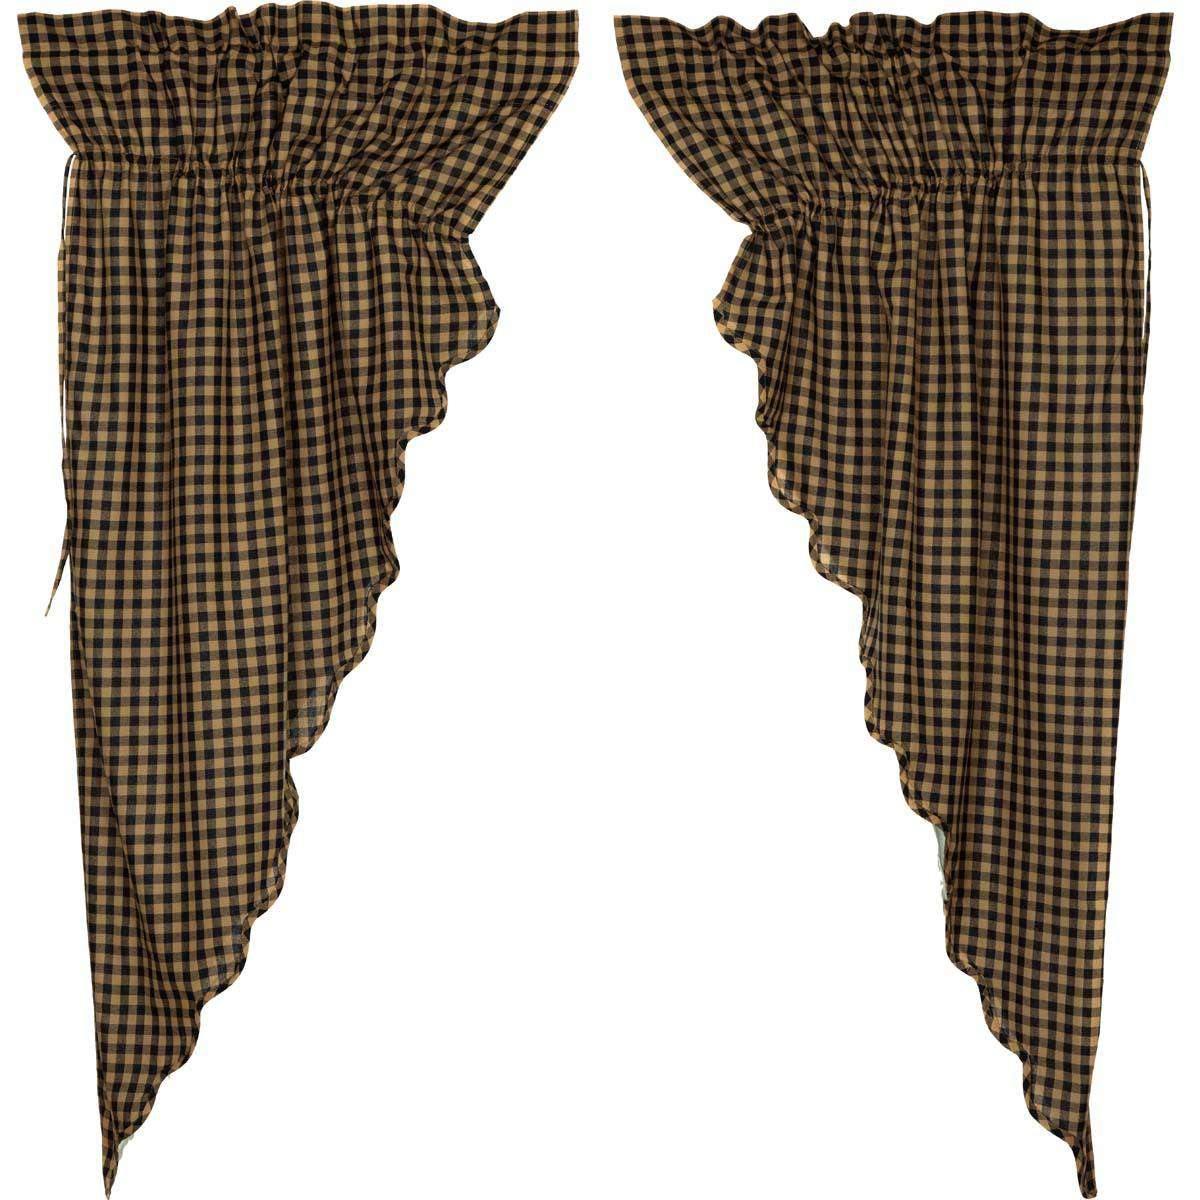 Black Check Scalloped Prairie Short Panel Curtain Set of 2 63x36x18 - The Fox Decor